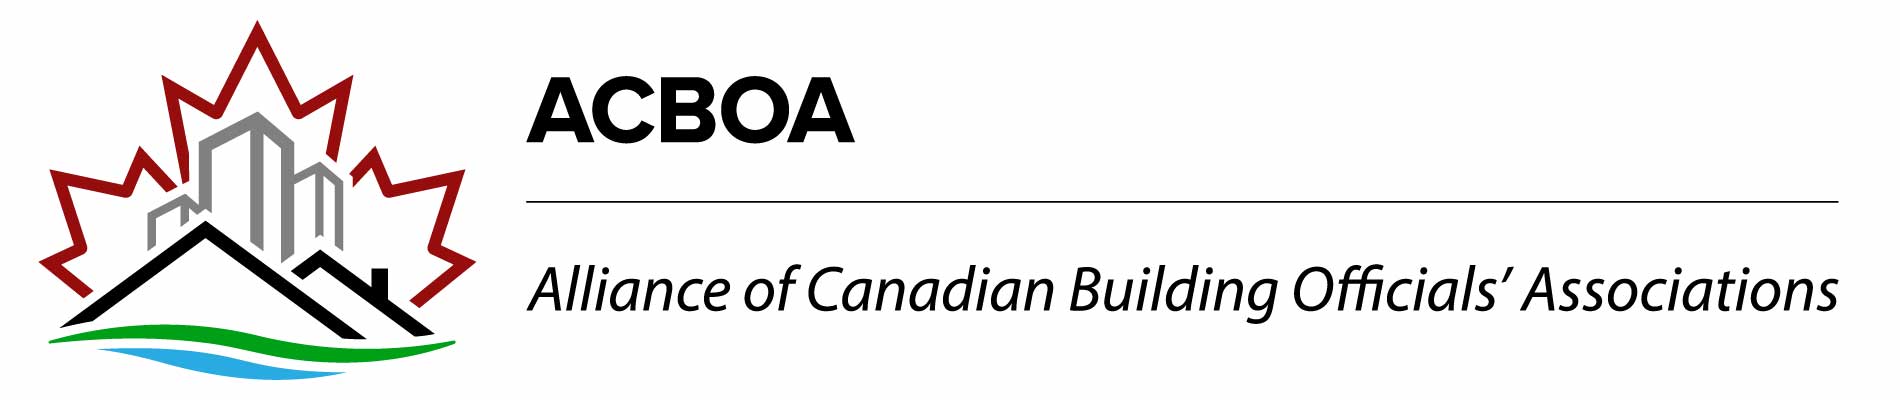 ACBOA Letterhead Logo Footer